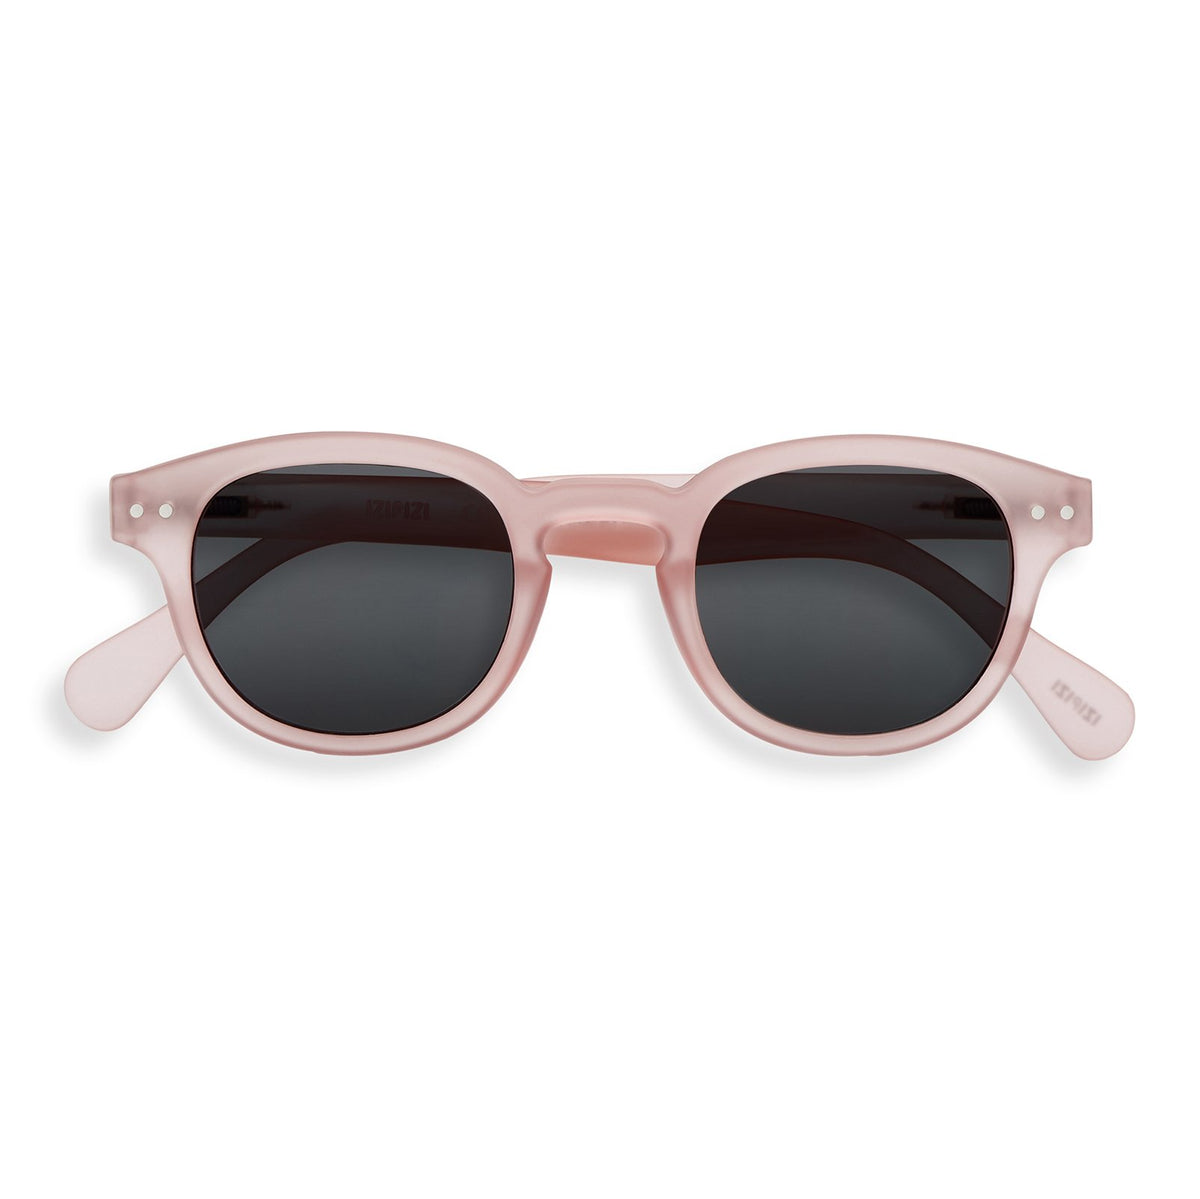 IZIPIZI, Sunglasses C Pink, Sunglasses,